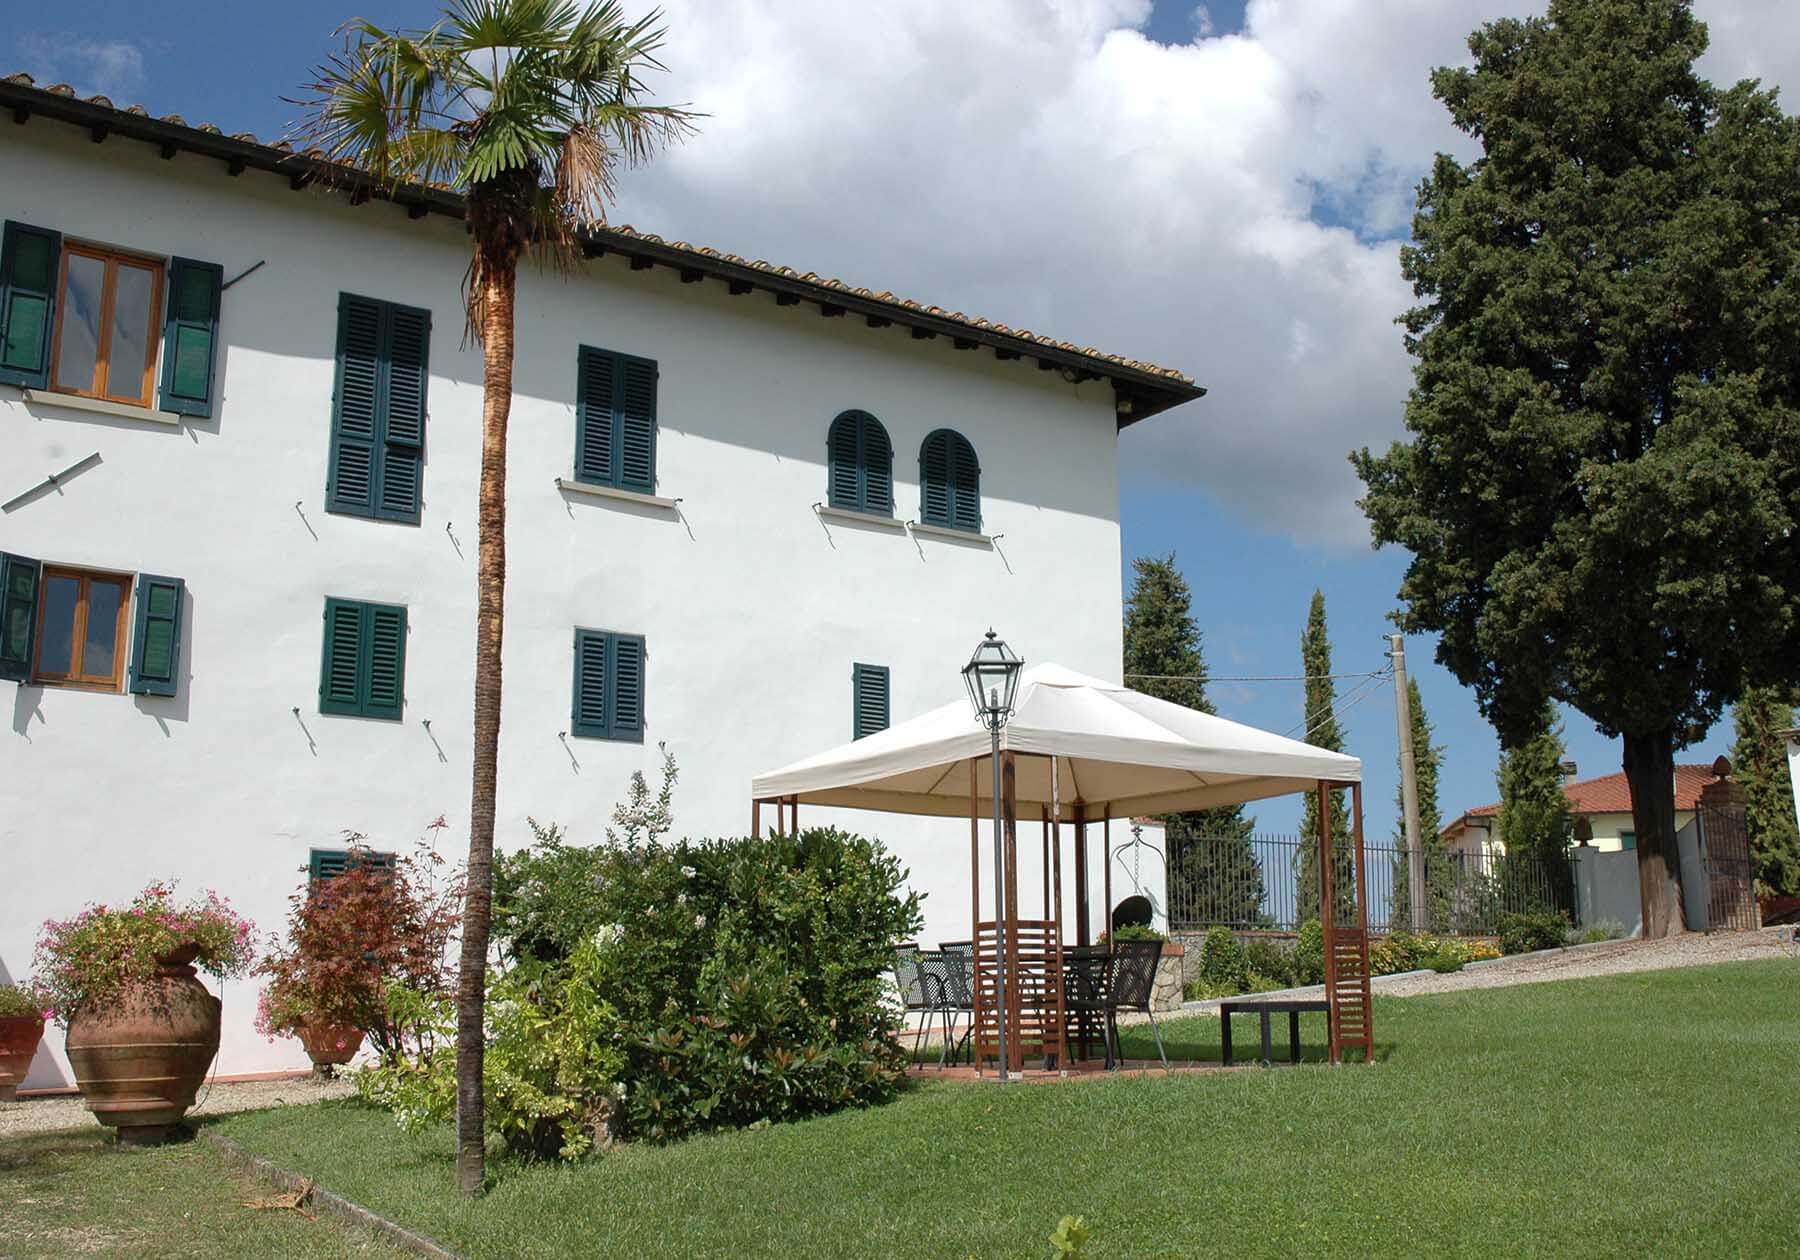 Exterior of the La Madonnina estate in Tuscany